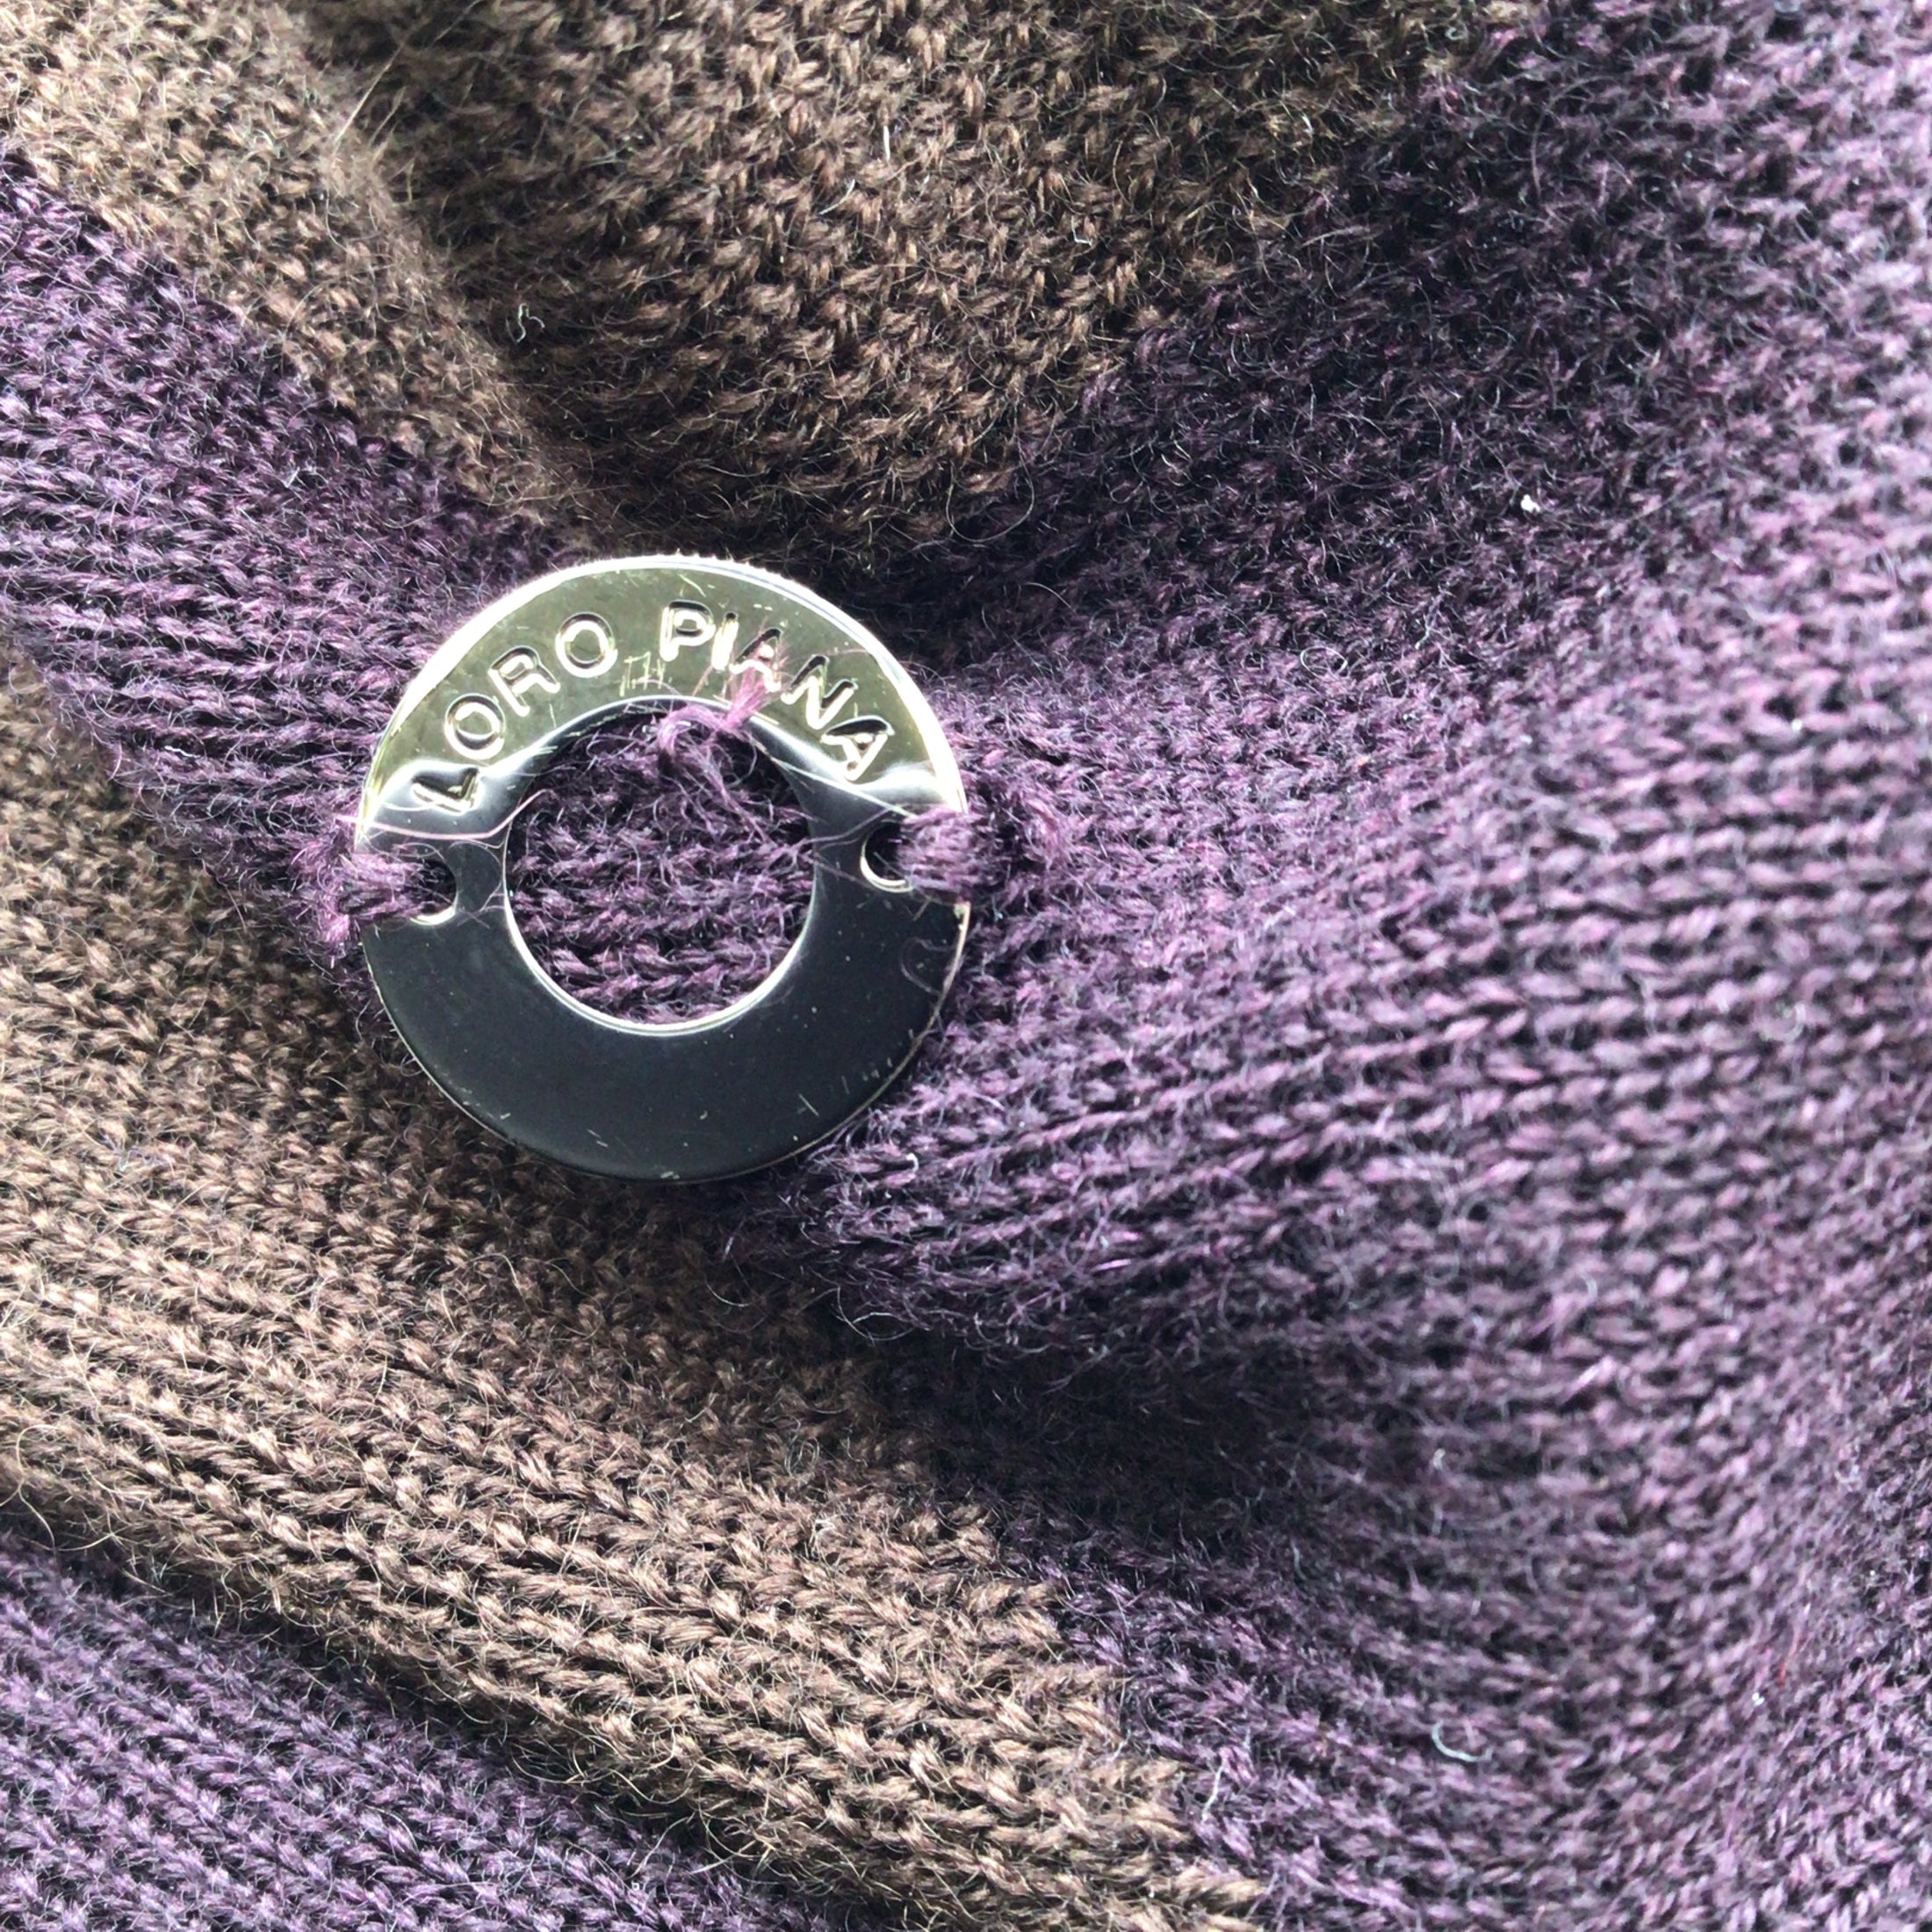 Loro Piana Plum Purple / Brown Scialle Twice Cashmere and Silk Knit Triangle Scarf